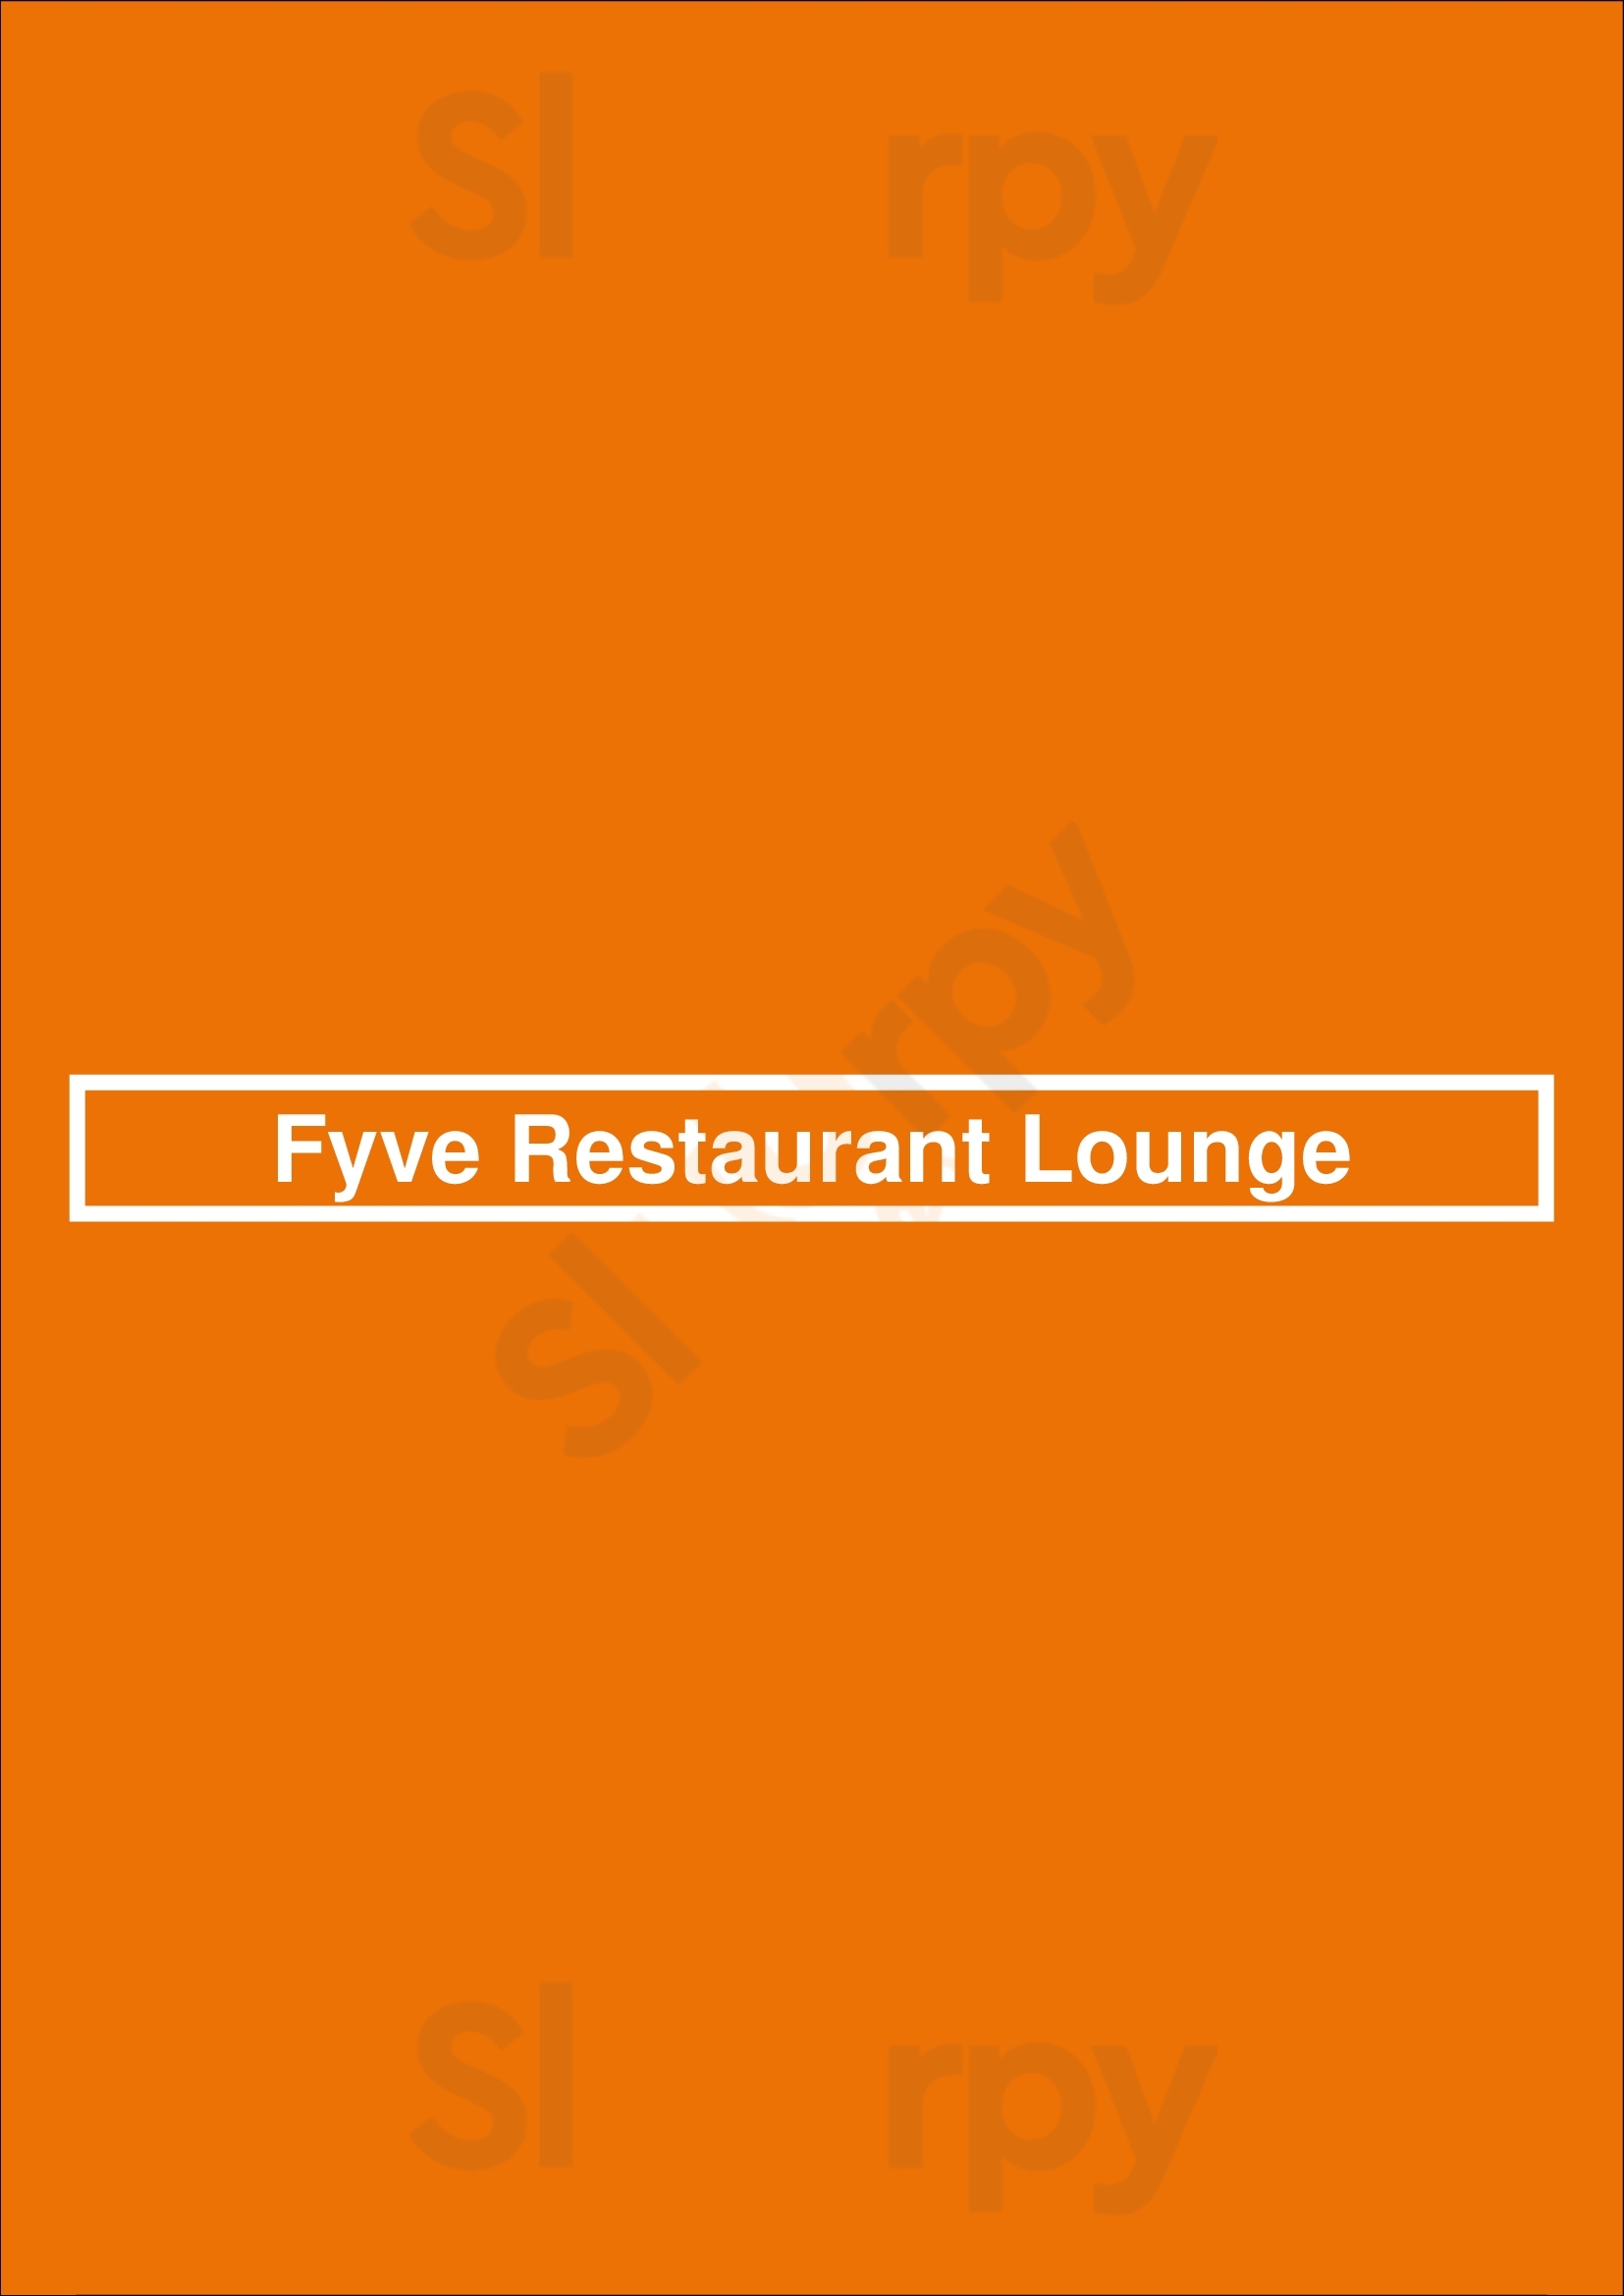 Fyve Restaurant Lounge Arlington Menu - 1